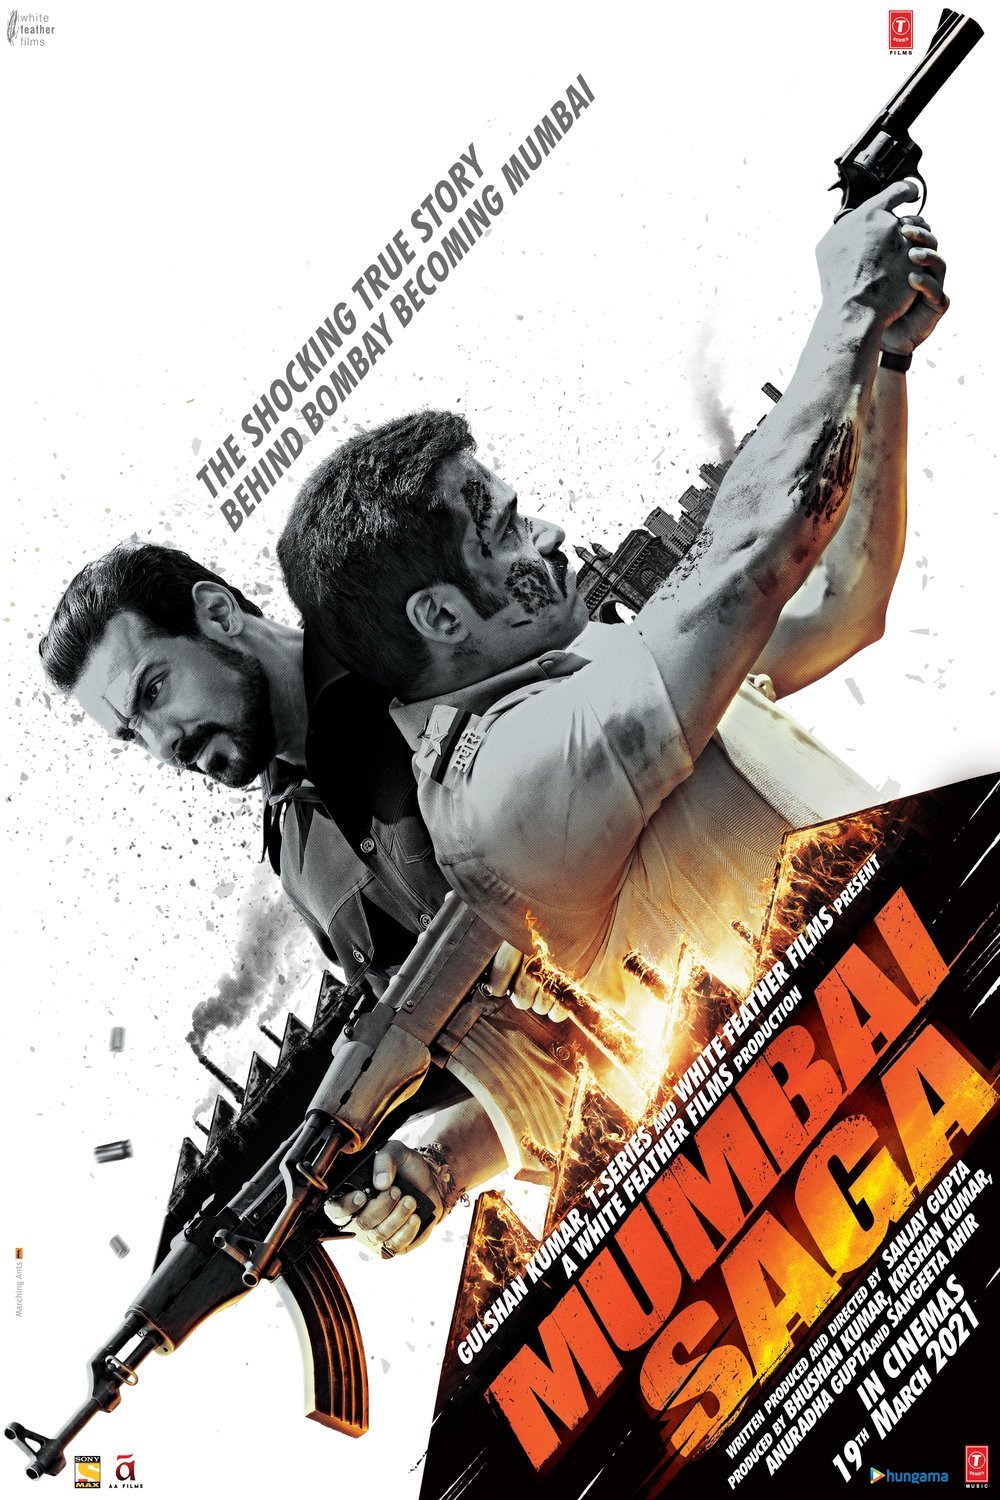 Hindi poster of the movie Mumbai Saga